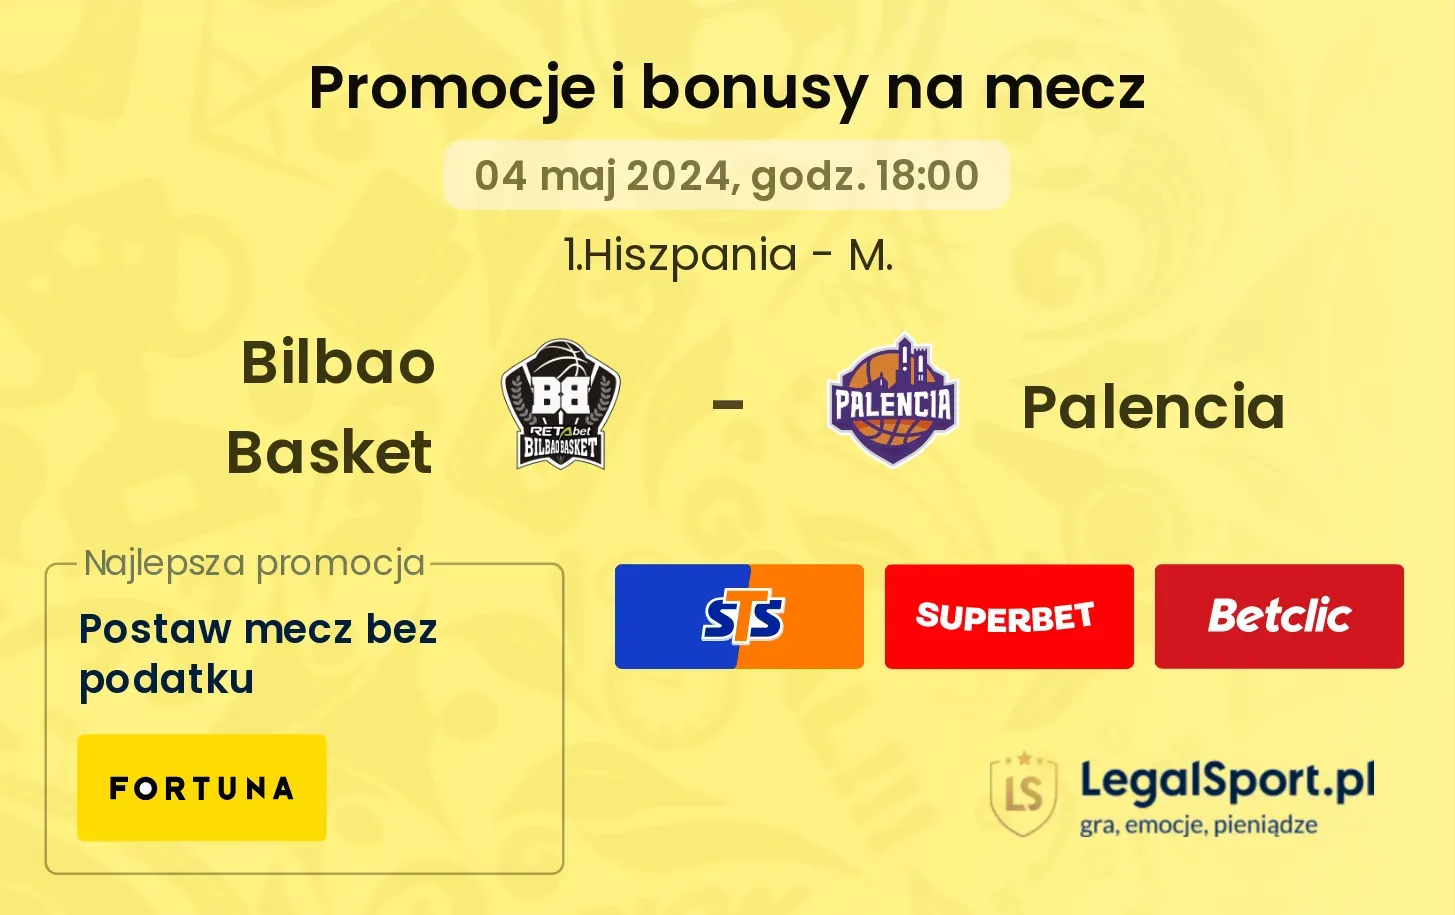 Bilbao Basket - Palencia promocje bonusy na mecz